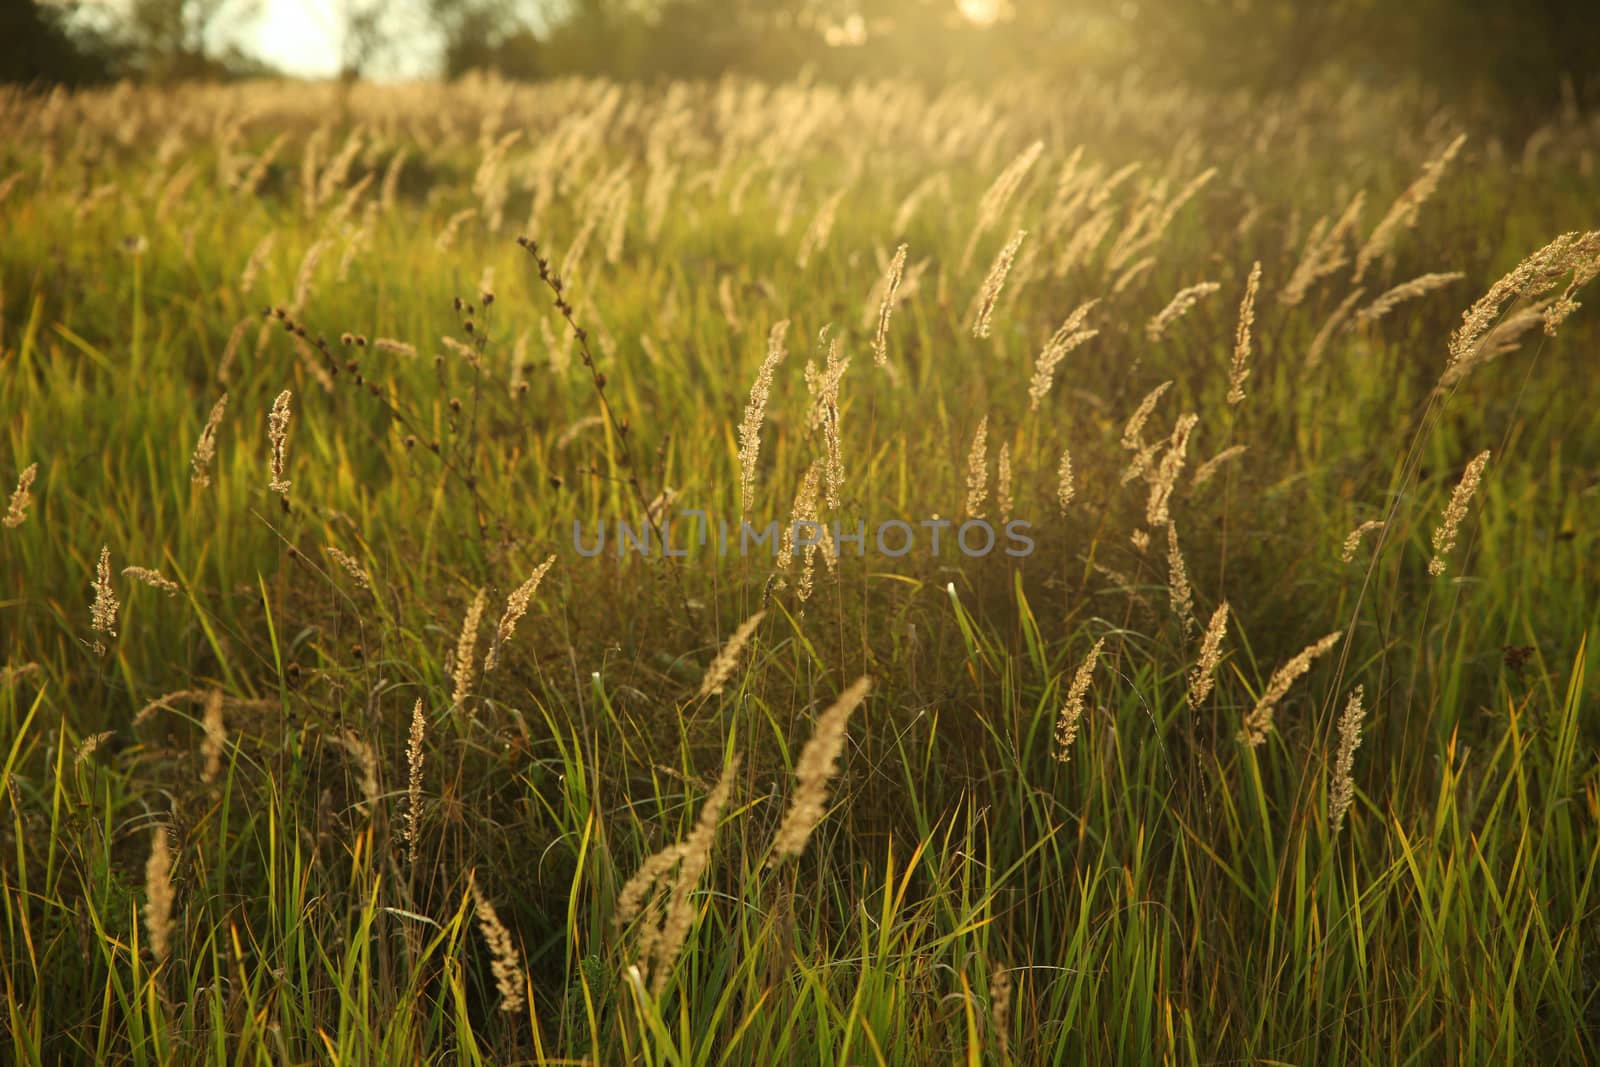 High grass in field at sunset by olga_zinovskaya